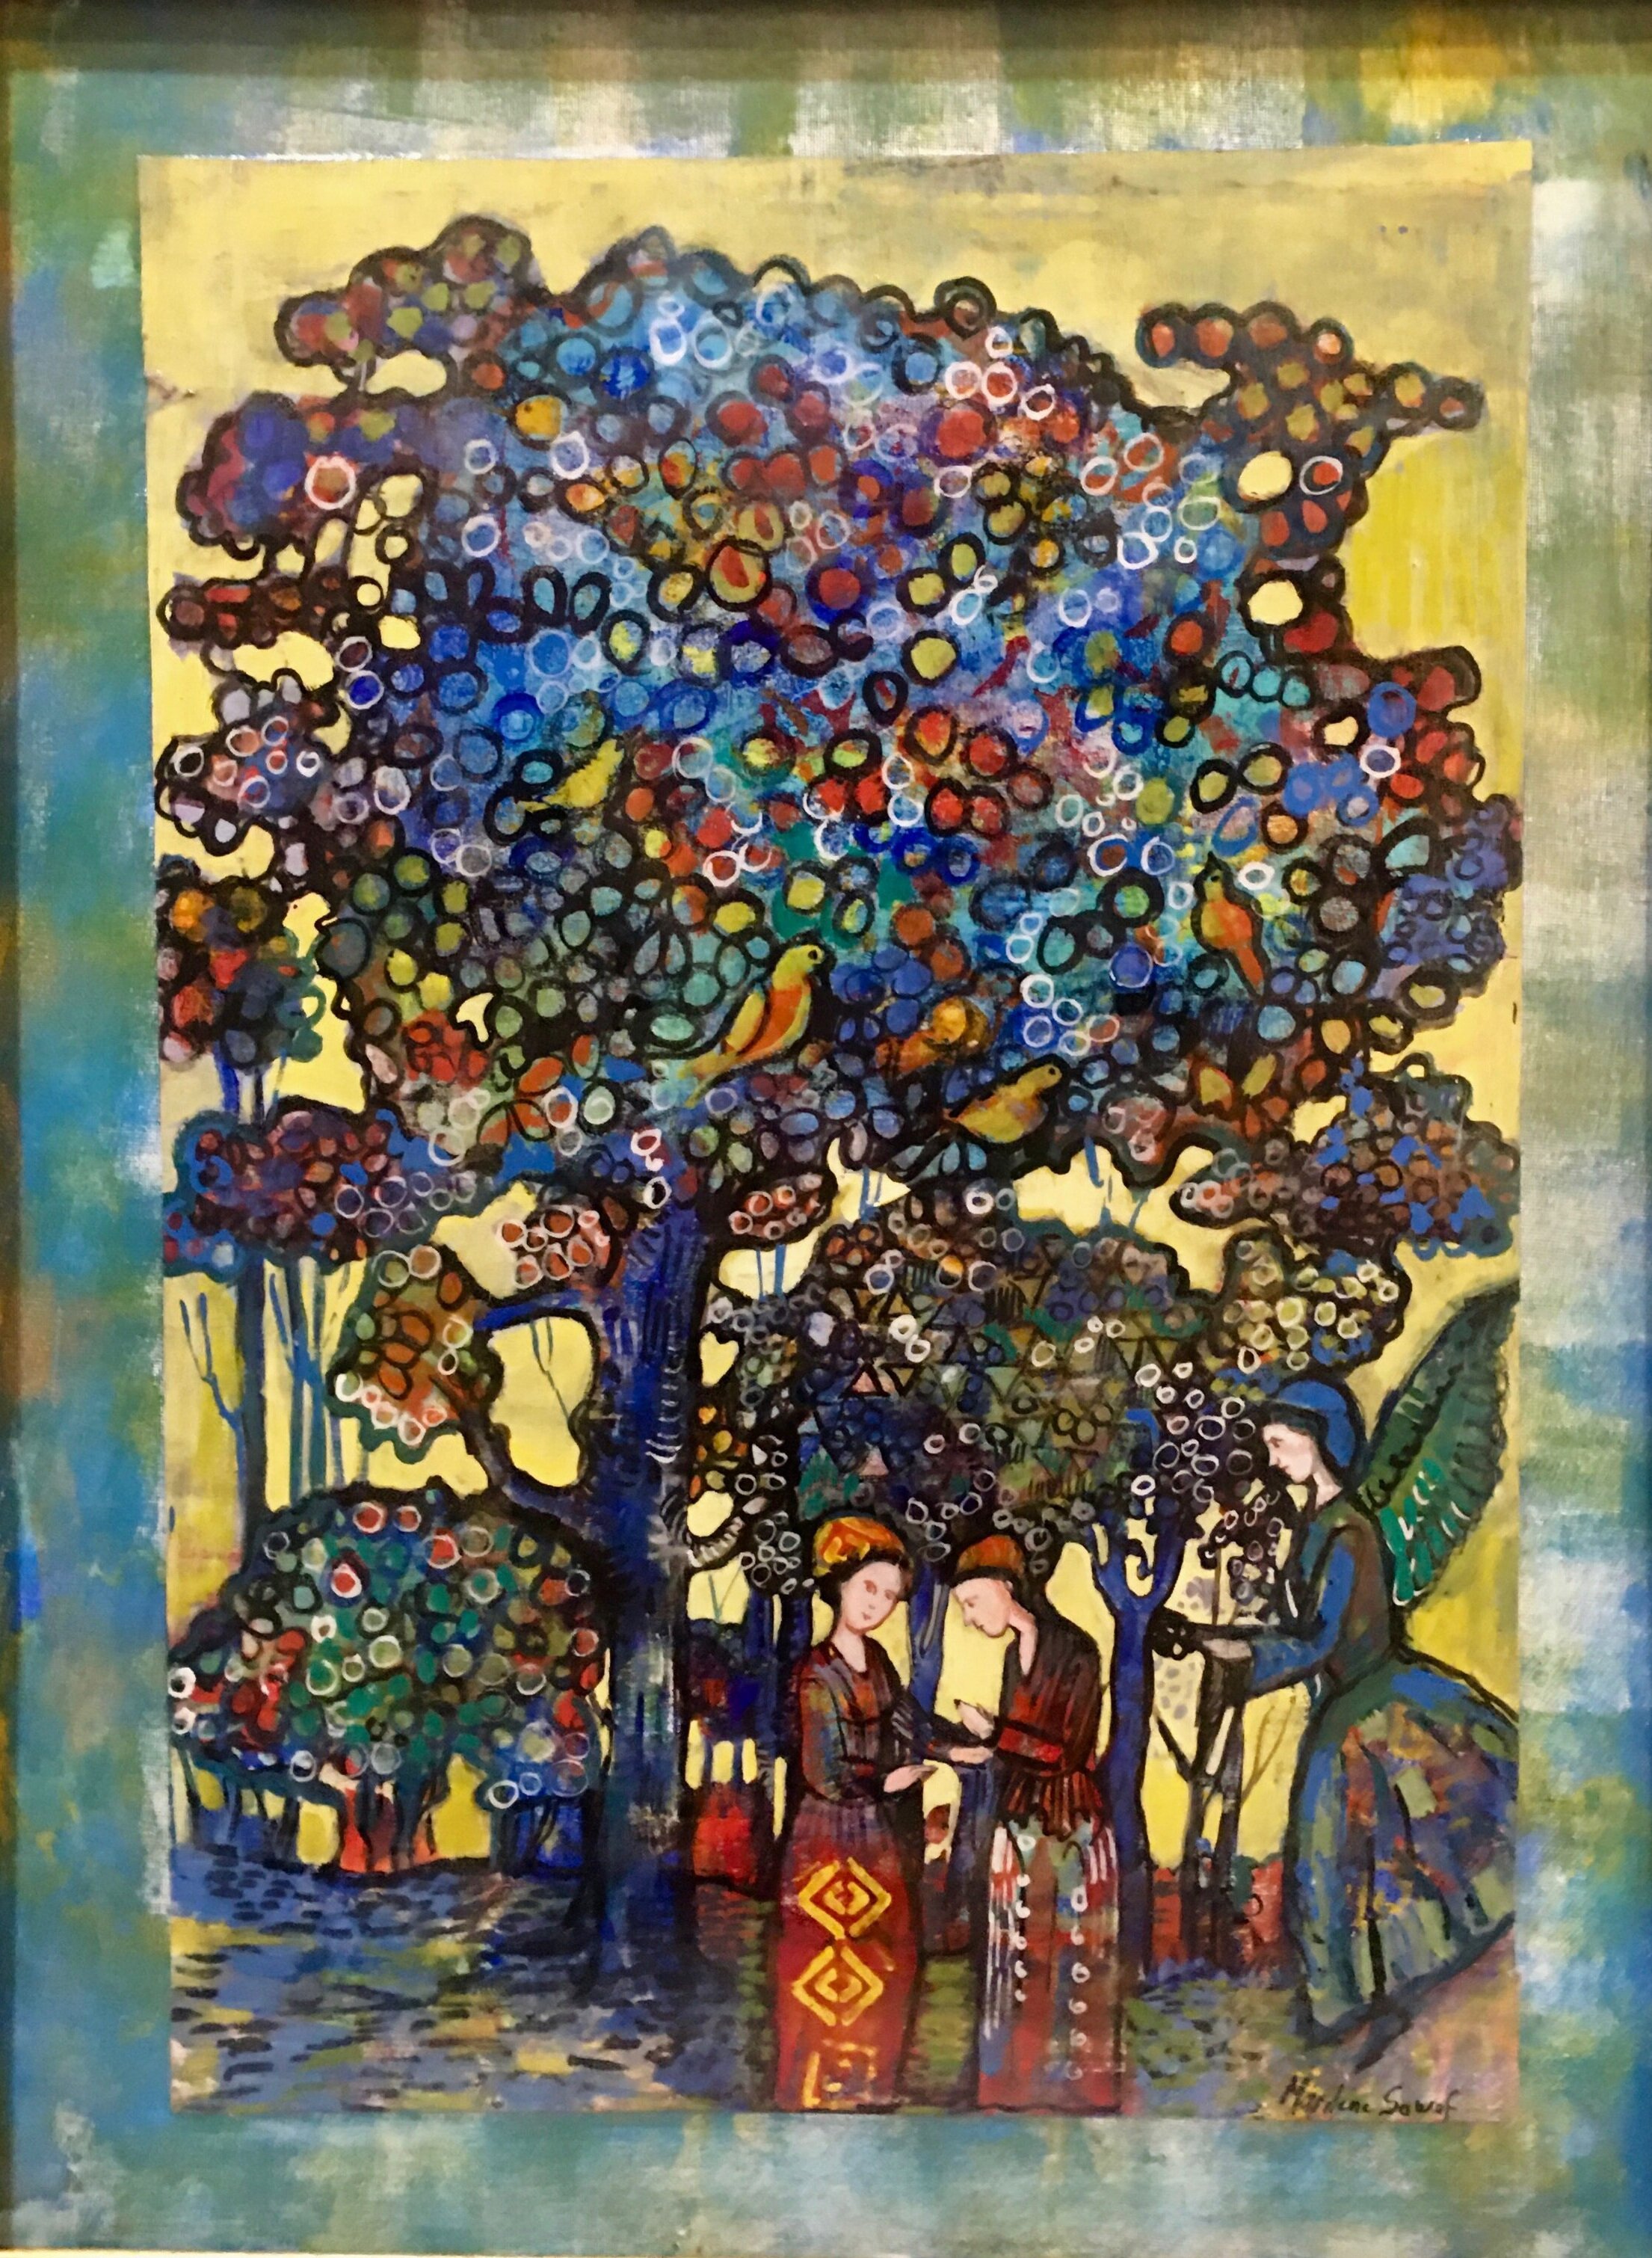 &lt;p&gt;&lt;strong&gt;MARILENE SAWAF&lt;/strong&gt;casein painting&lt;a href="/marilene-sawaf-ill2020"&gt;More →&lt;/a&gt;&lt;/p&gt; 